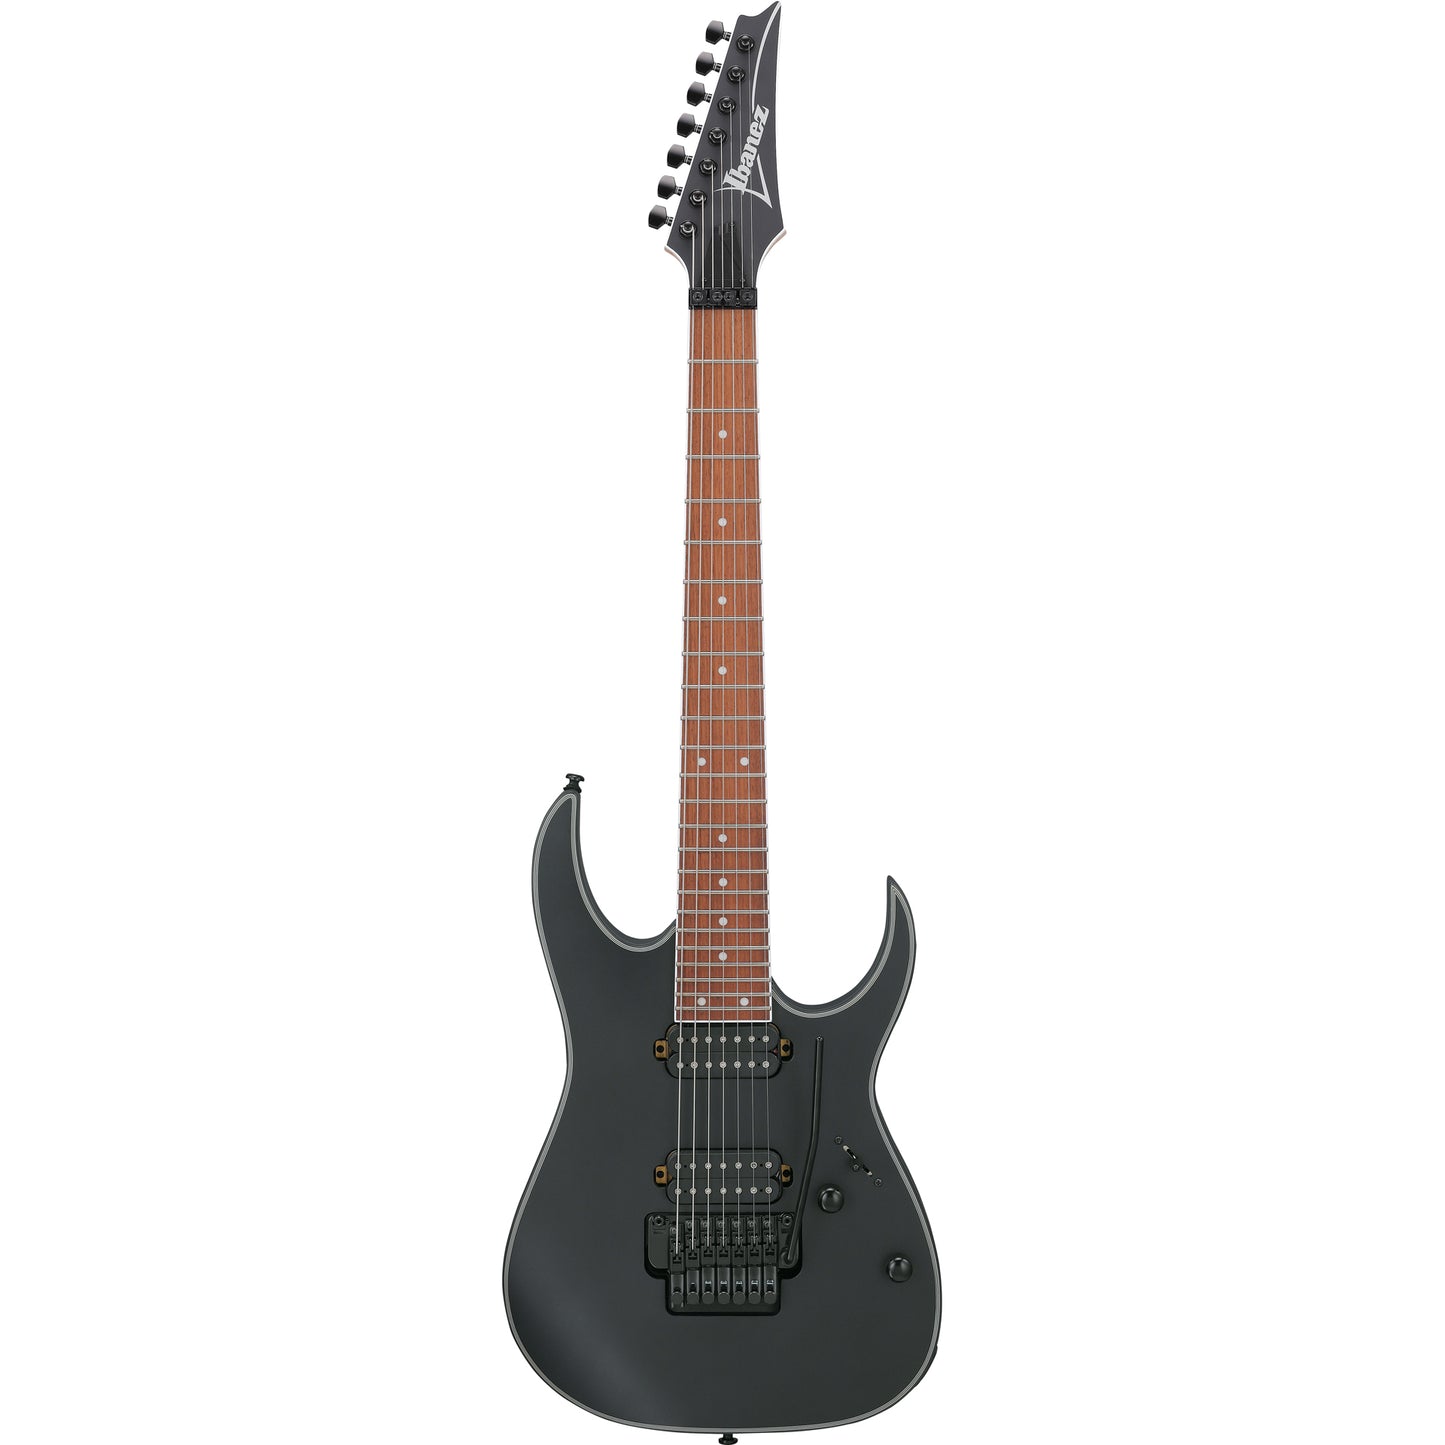 Ibanez RG Standard 7 String Electric Guitar - Black Flat